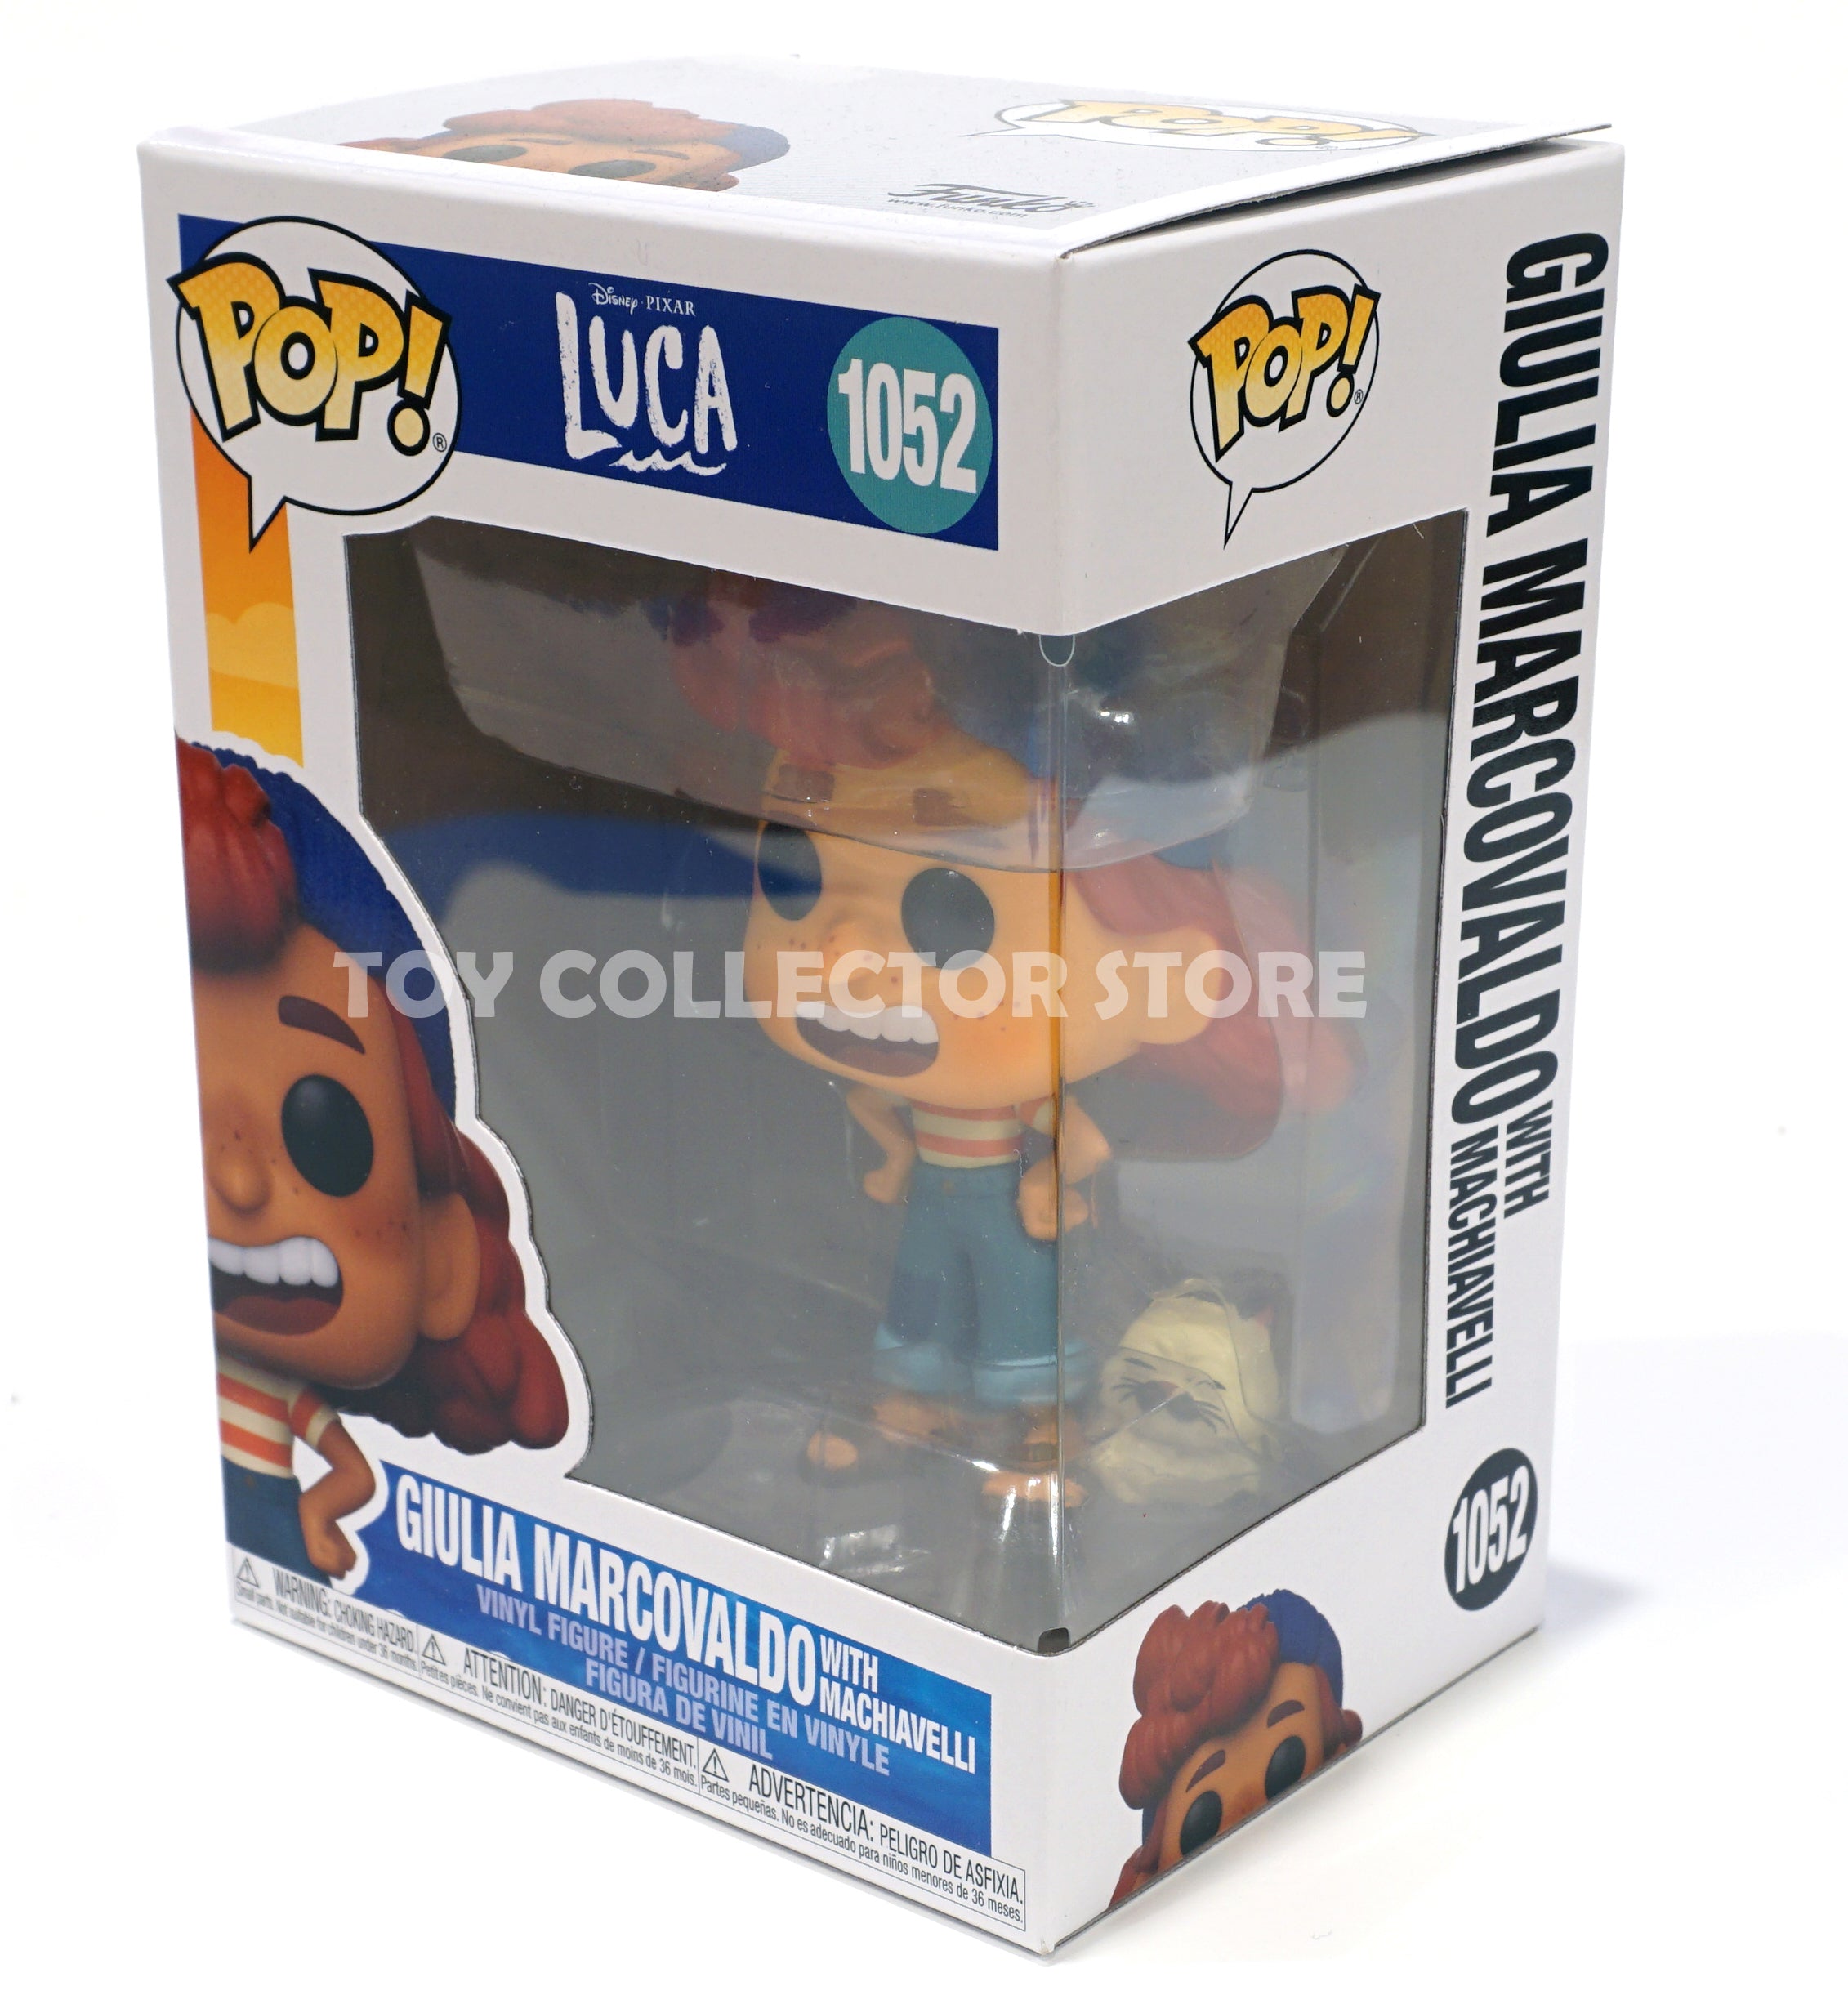 Luca - Luca Paguro Land - POP! Disney action figure 1053